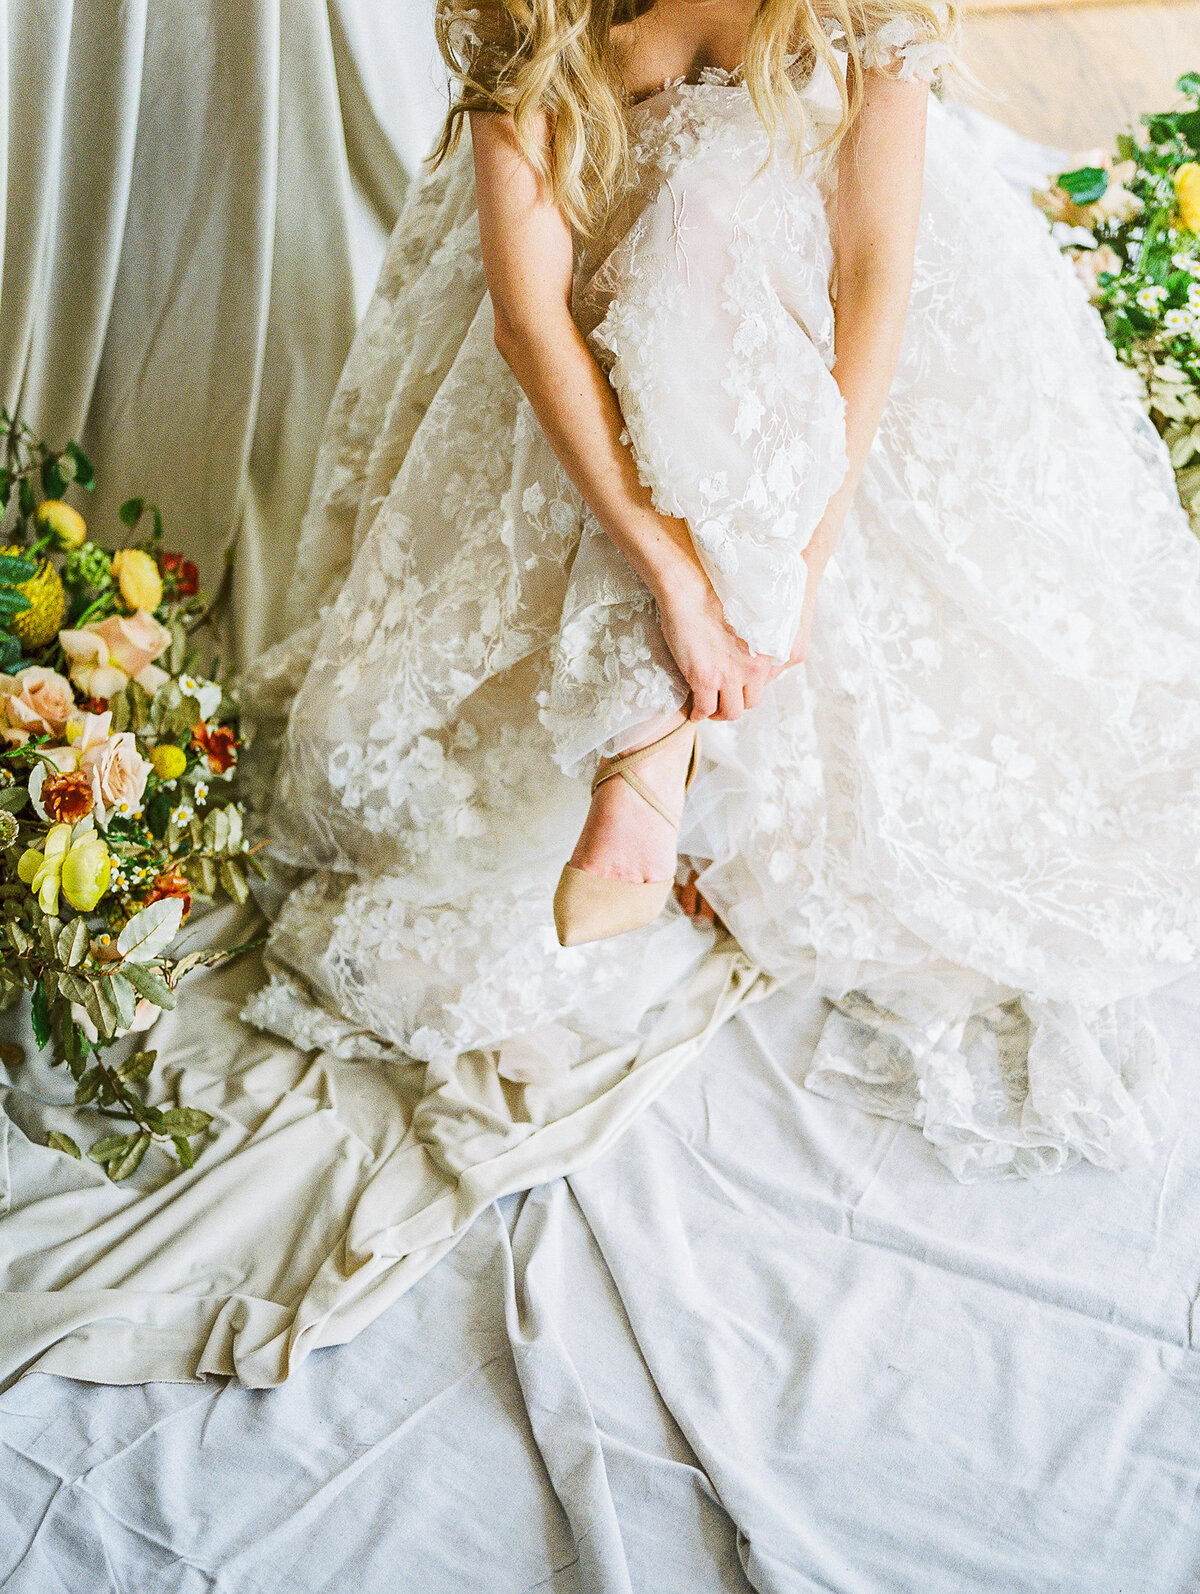 Megan_Harris_Photography_Fine_Art_Nashville_Tennessee_WeddingShoot_MeganHarris_Edit (32 of 37)